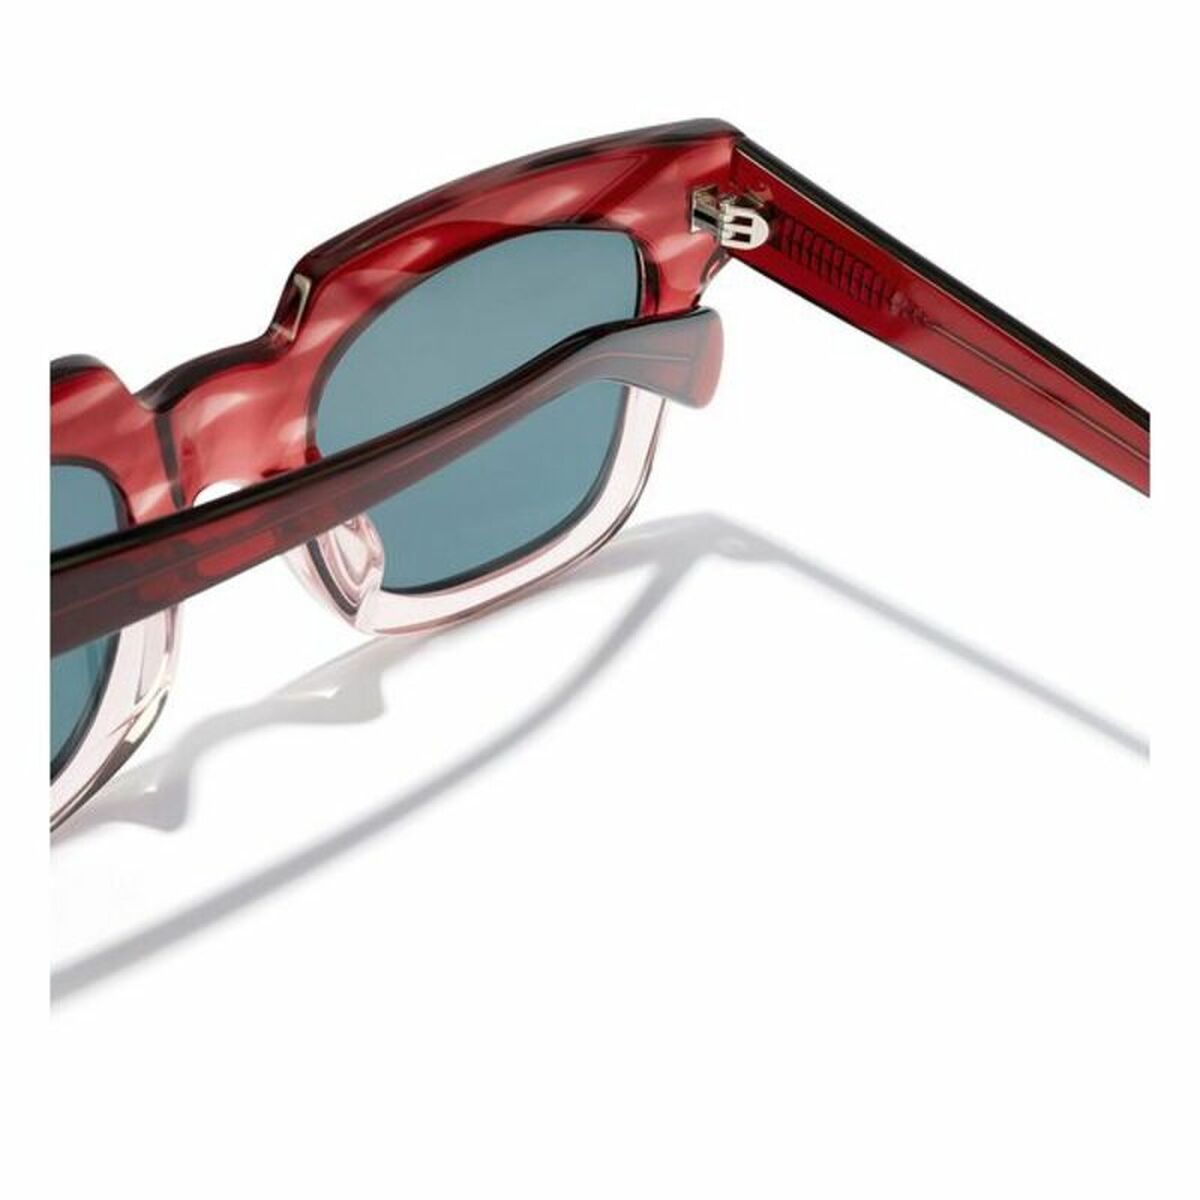 Unisex Sunglasses Row Hawkers HOSP20LLT0